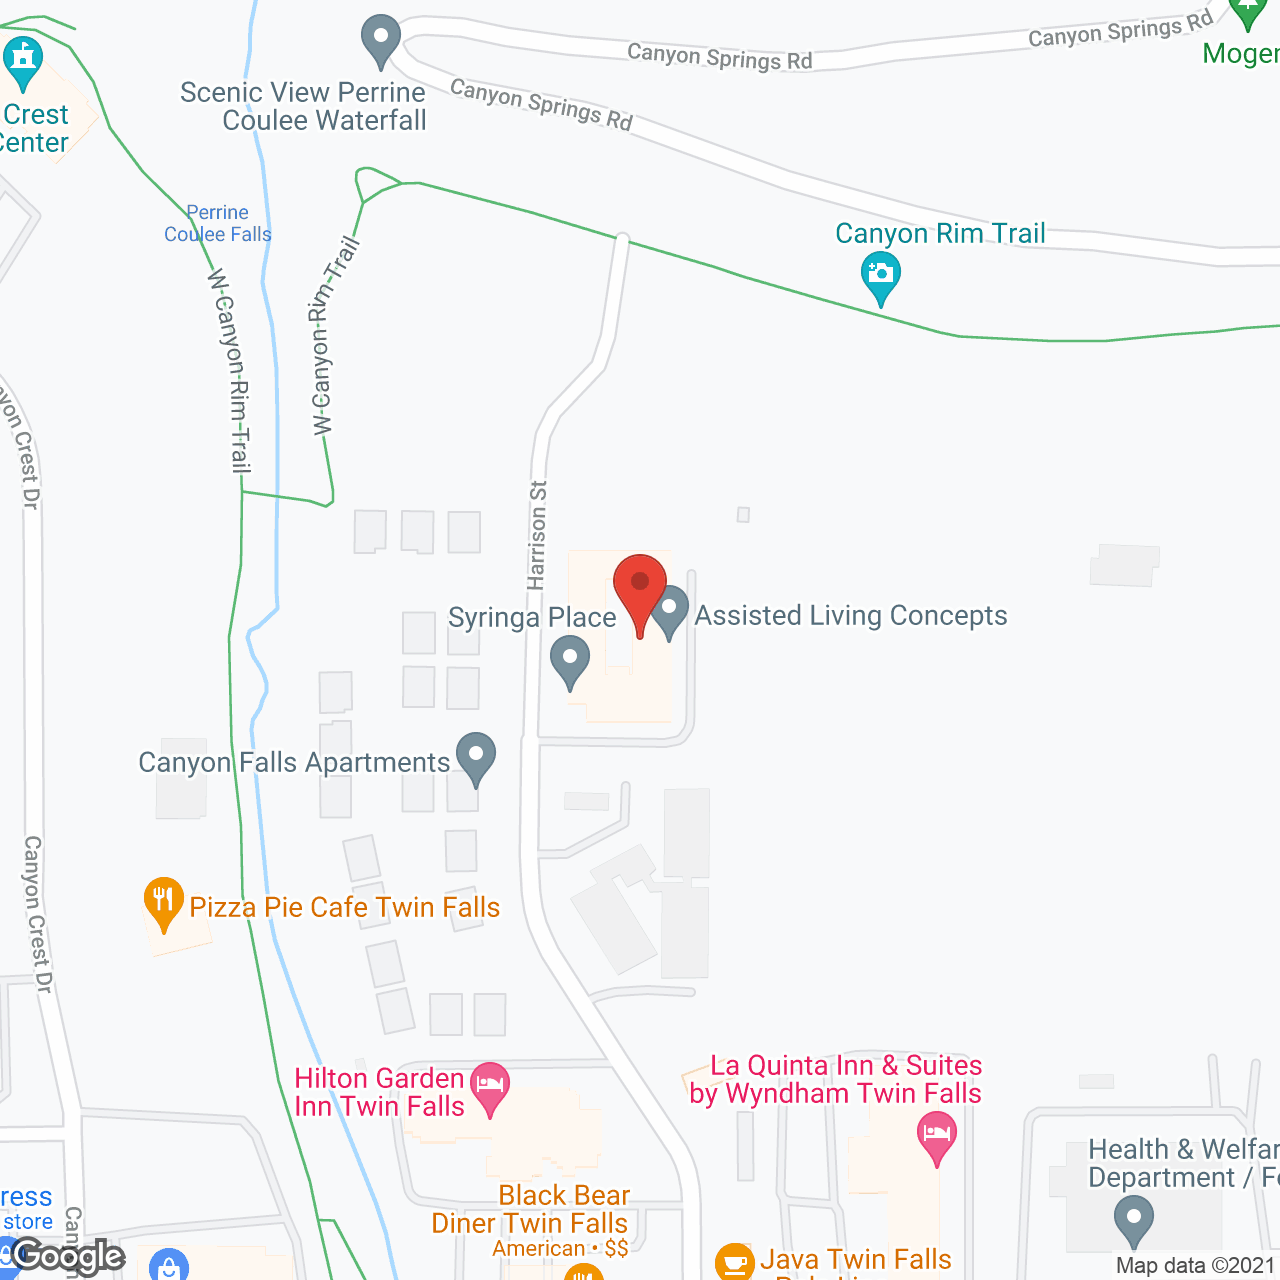 Syringa Place in google map